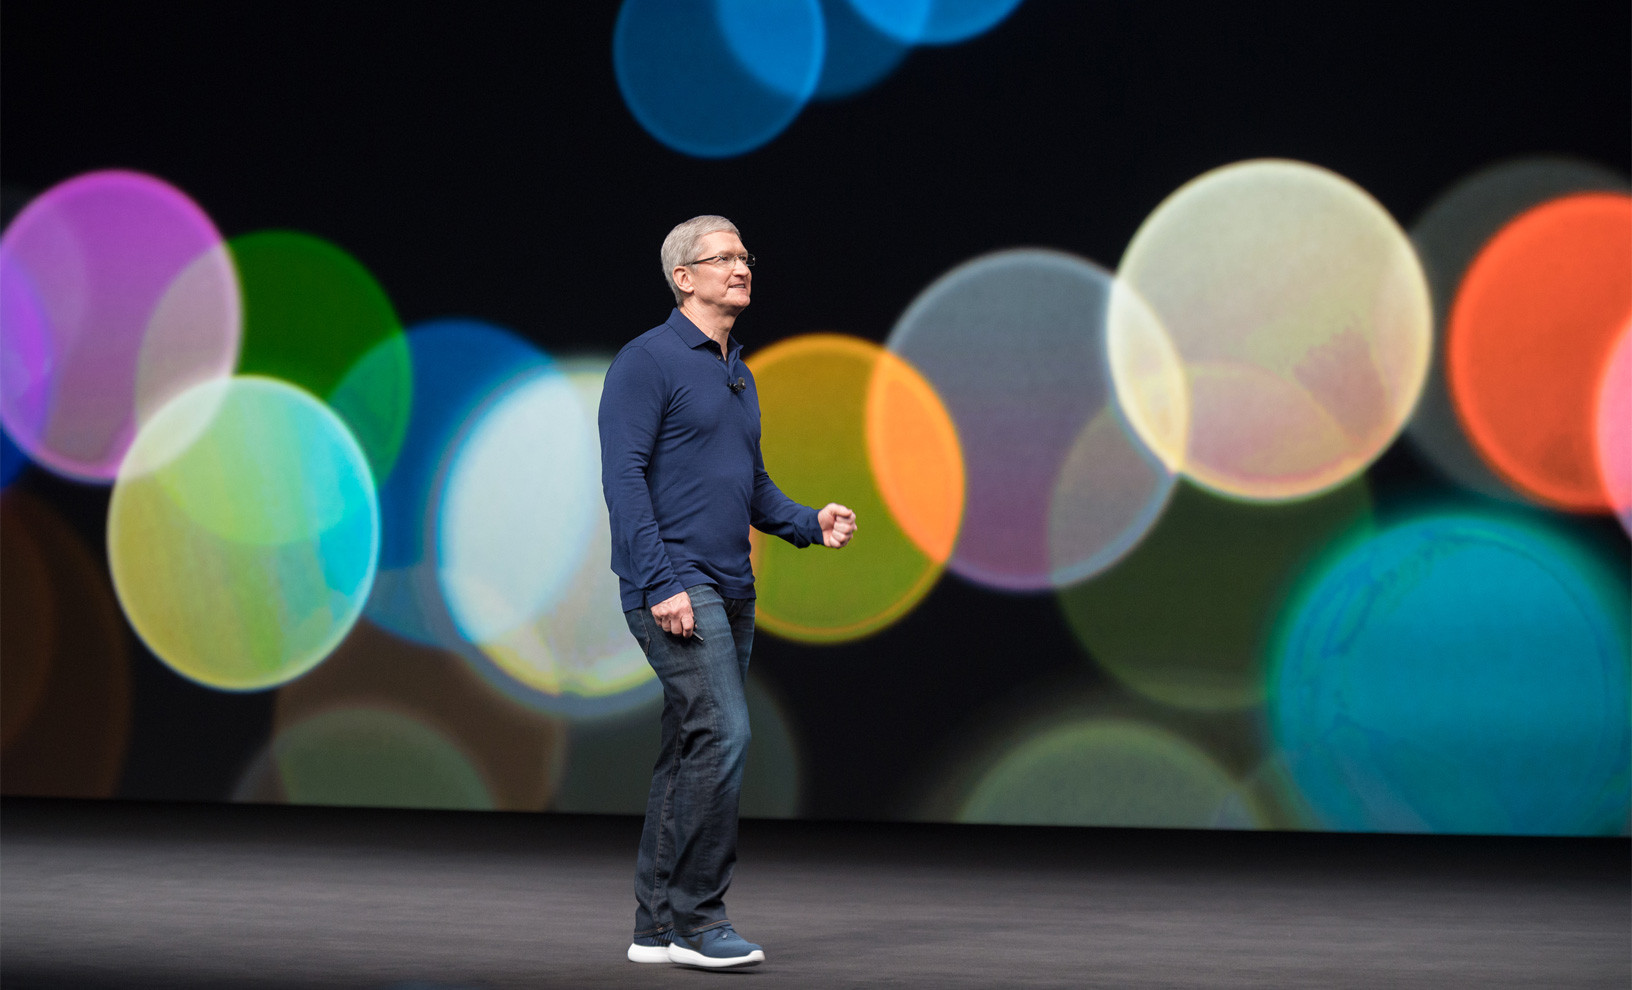 Беспроводная революция: iPhone 7 и другие новинки от Apple